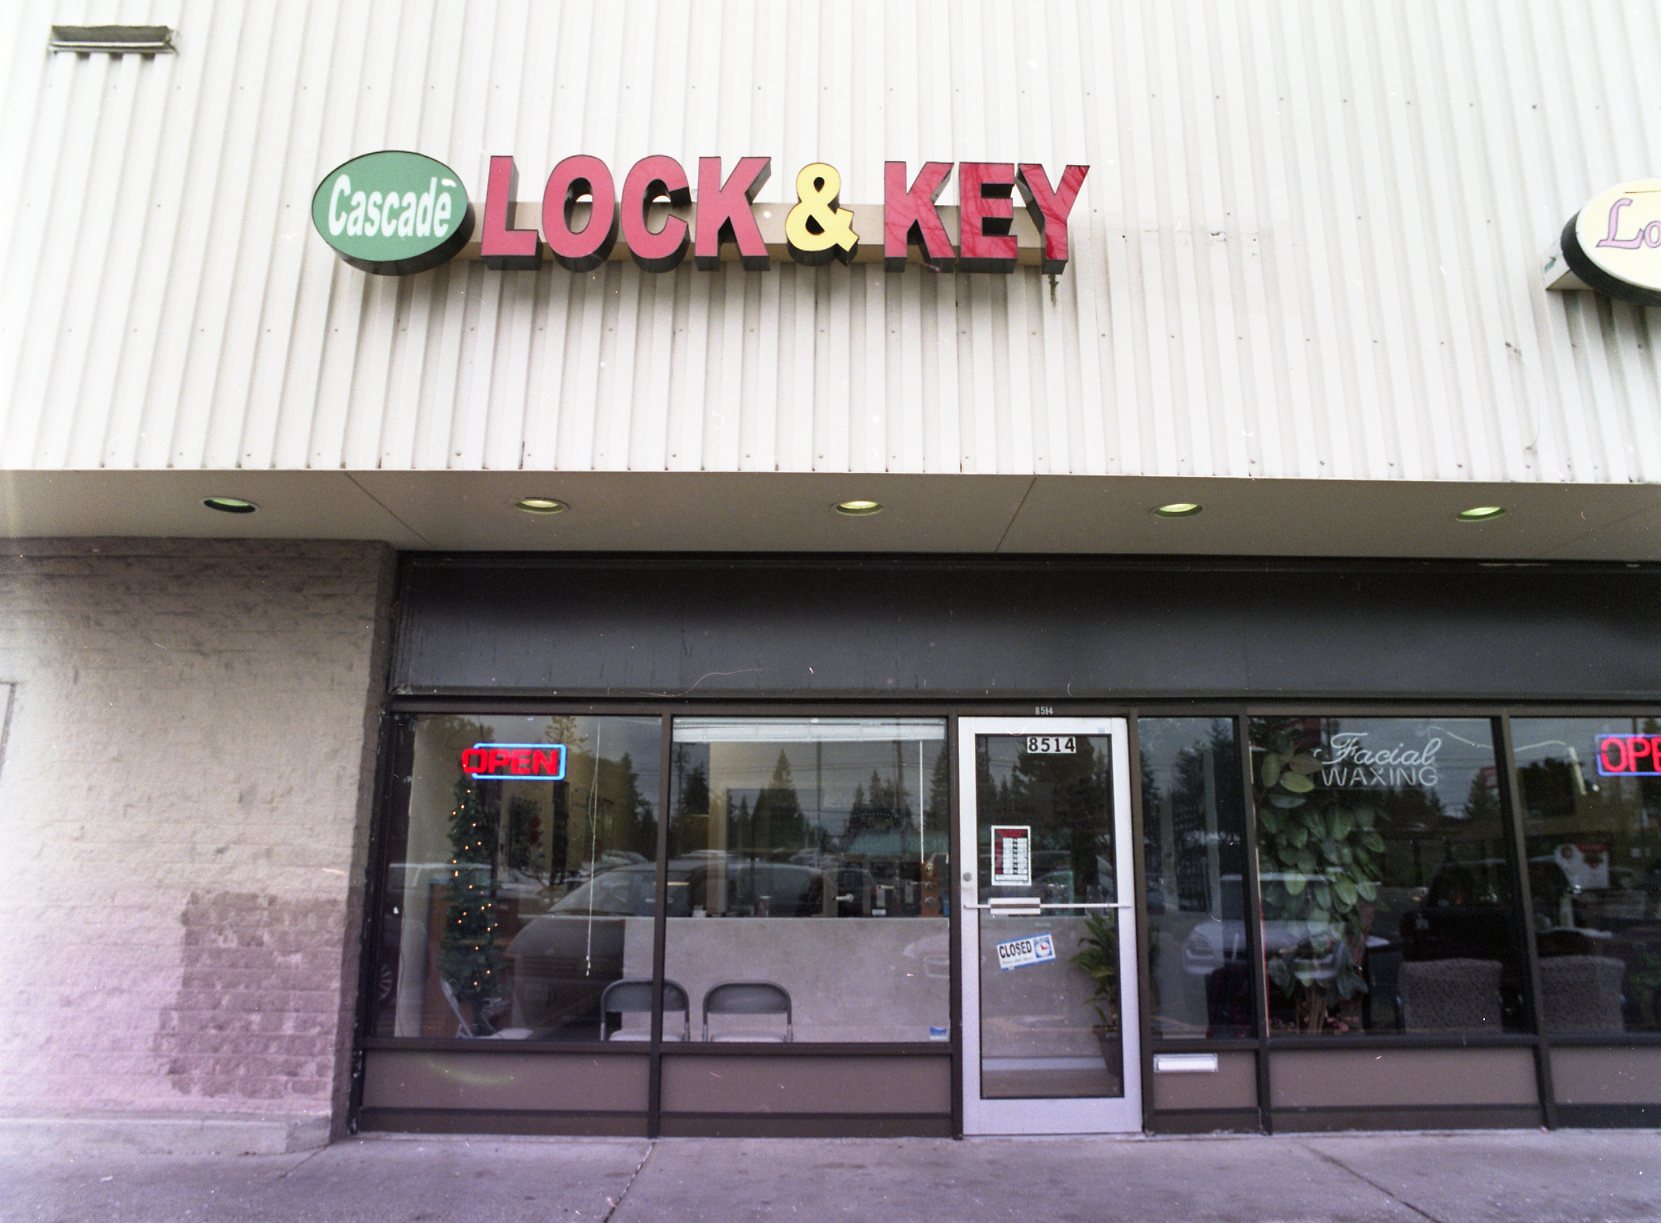 Cascade Lock & Key